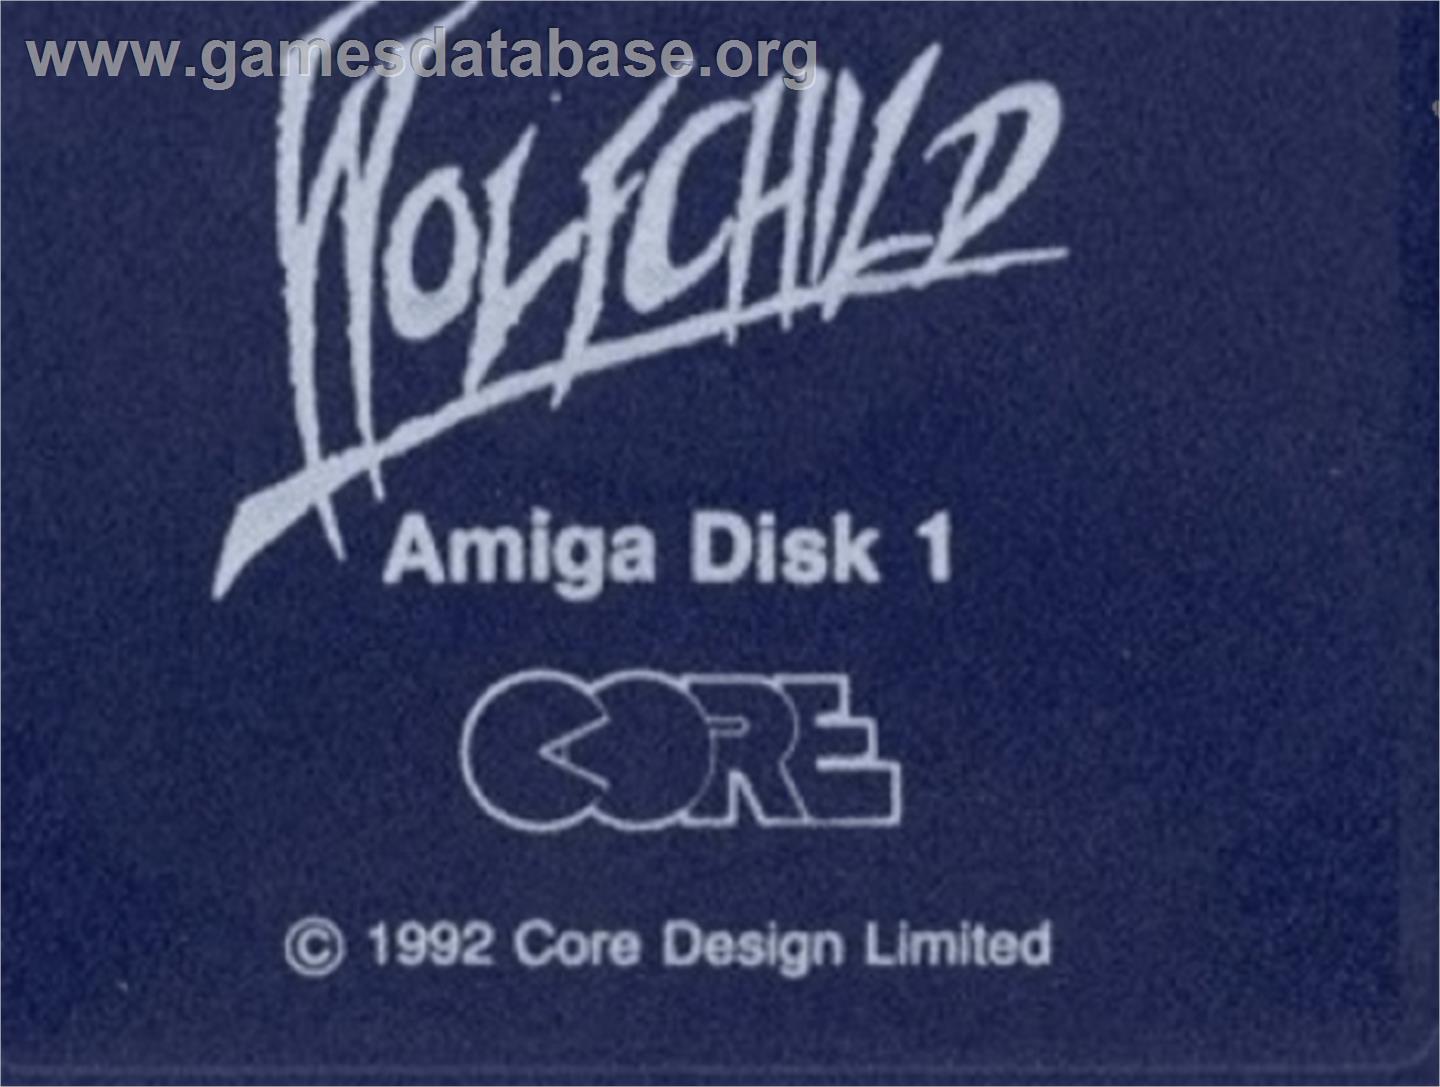 Wolfchild - Commodore Amiga - Artwork - Cartridge Top